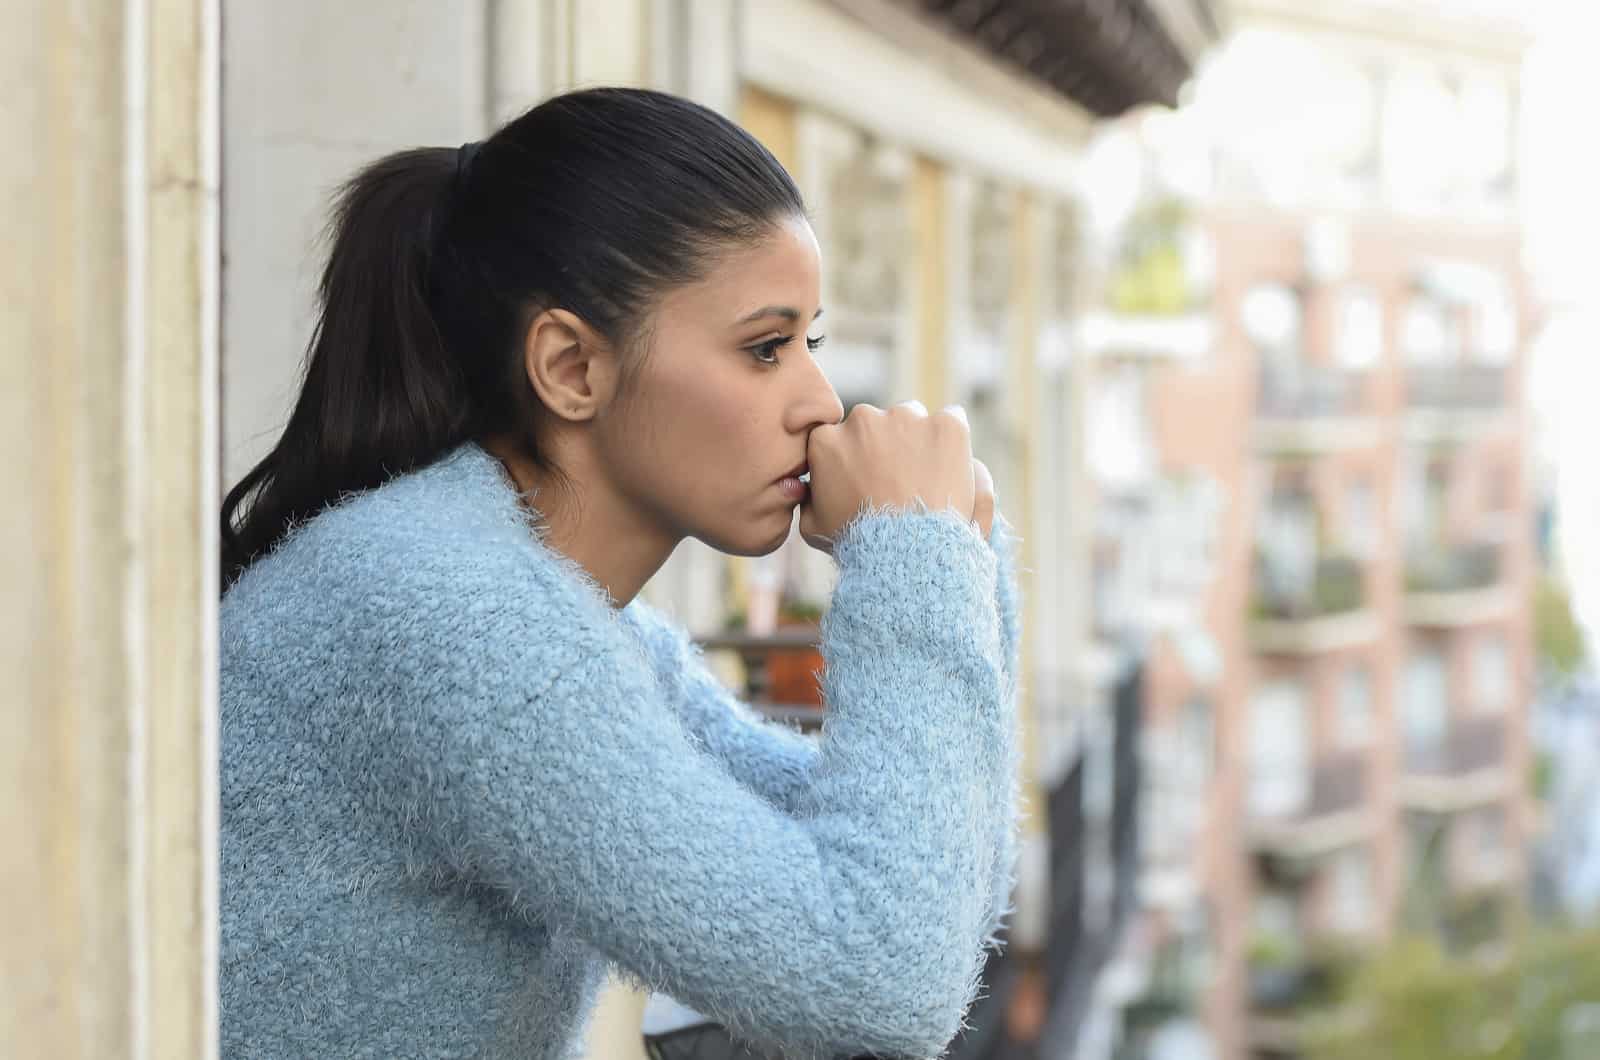 mujer triste y pensativa mirando a la calle